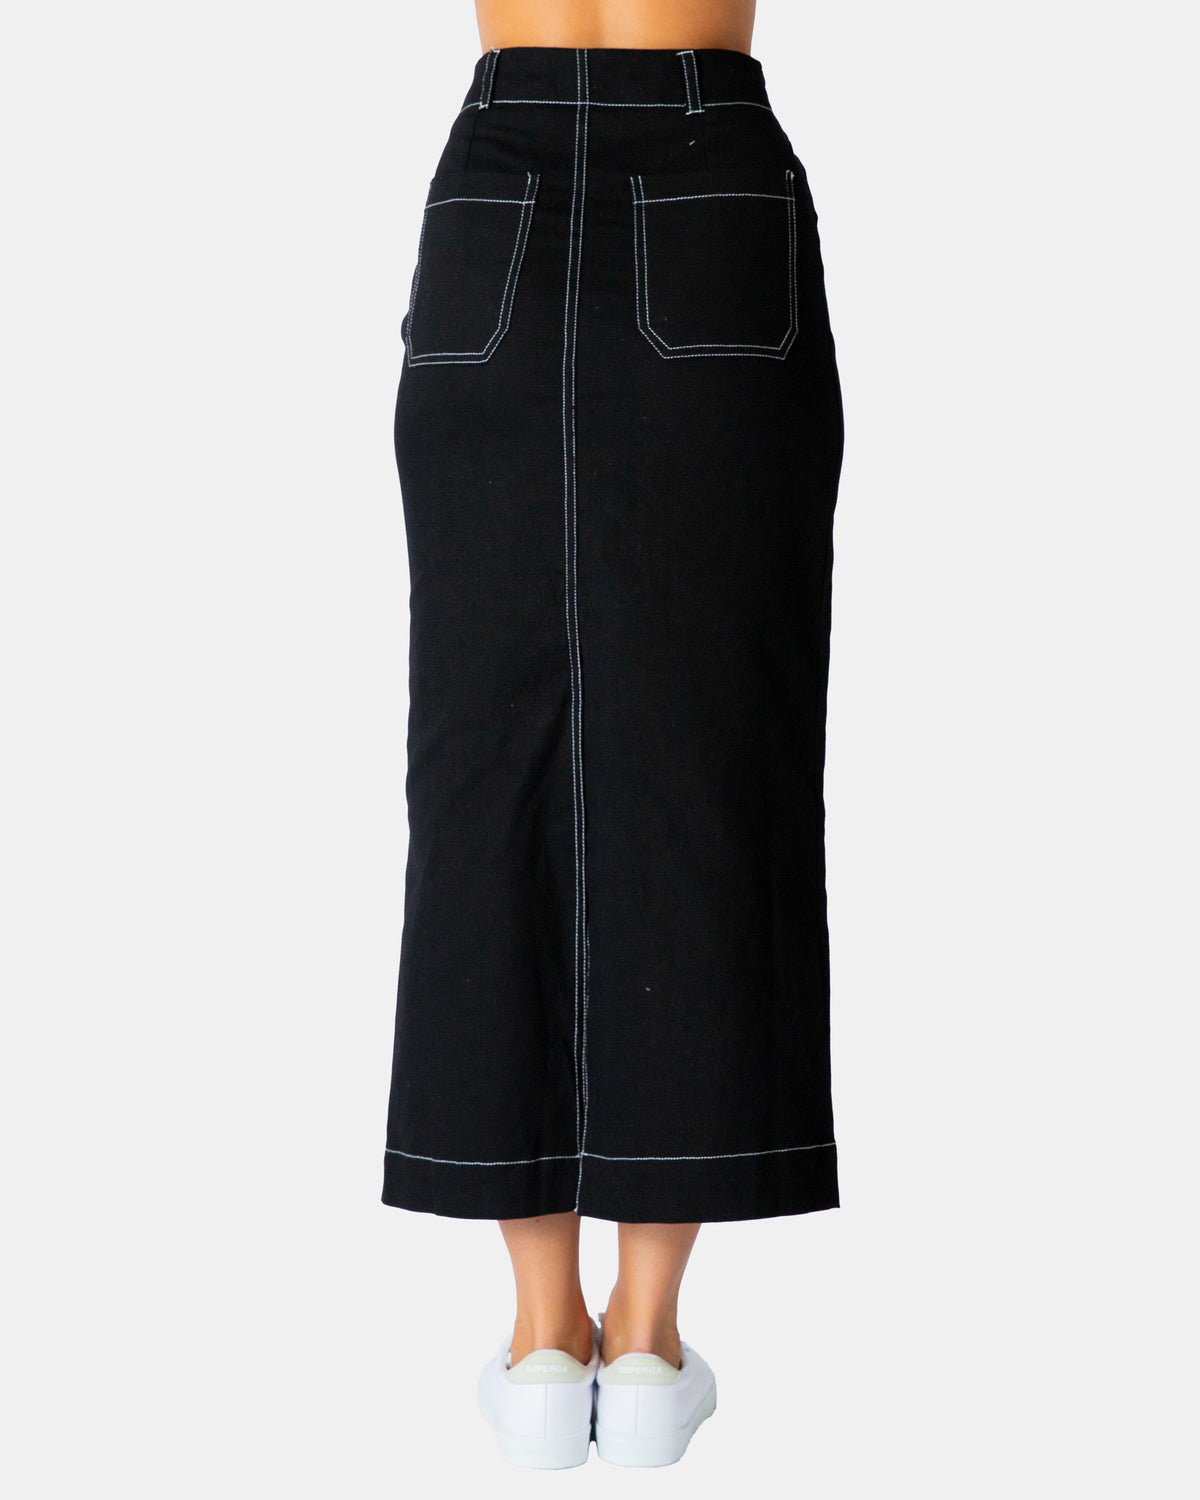 Paper Heart - Contrast Stitch Skirt